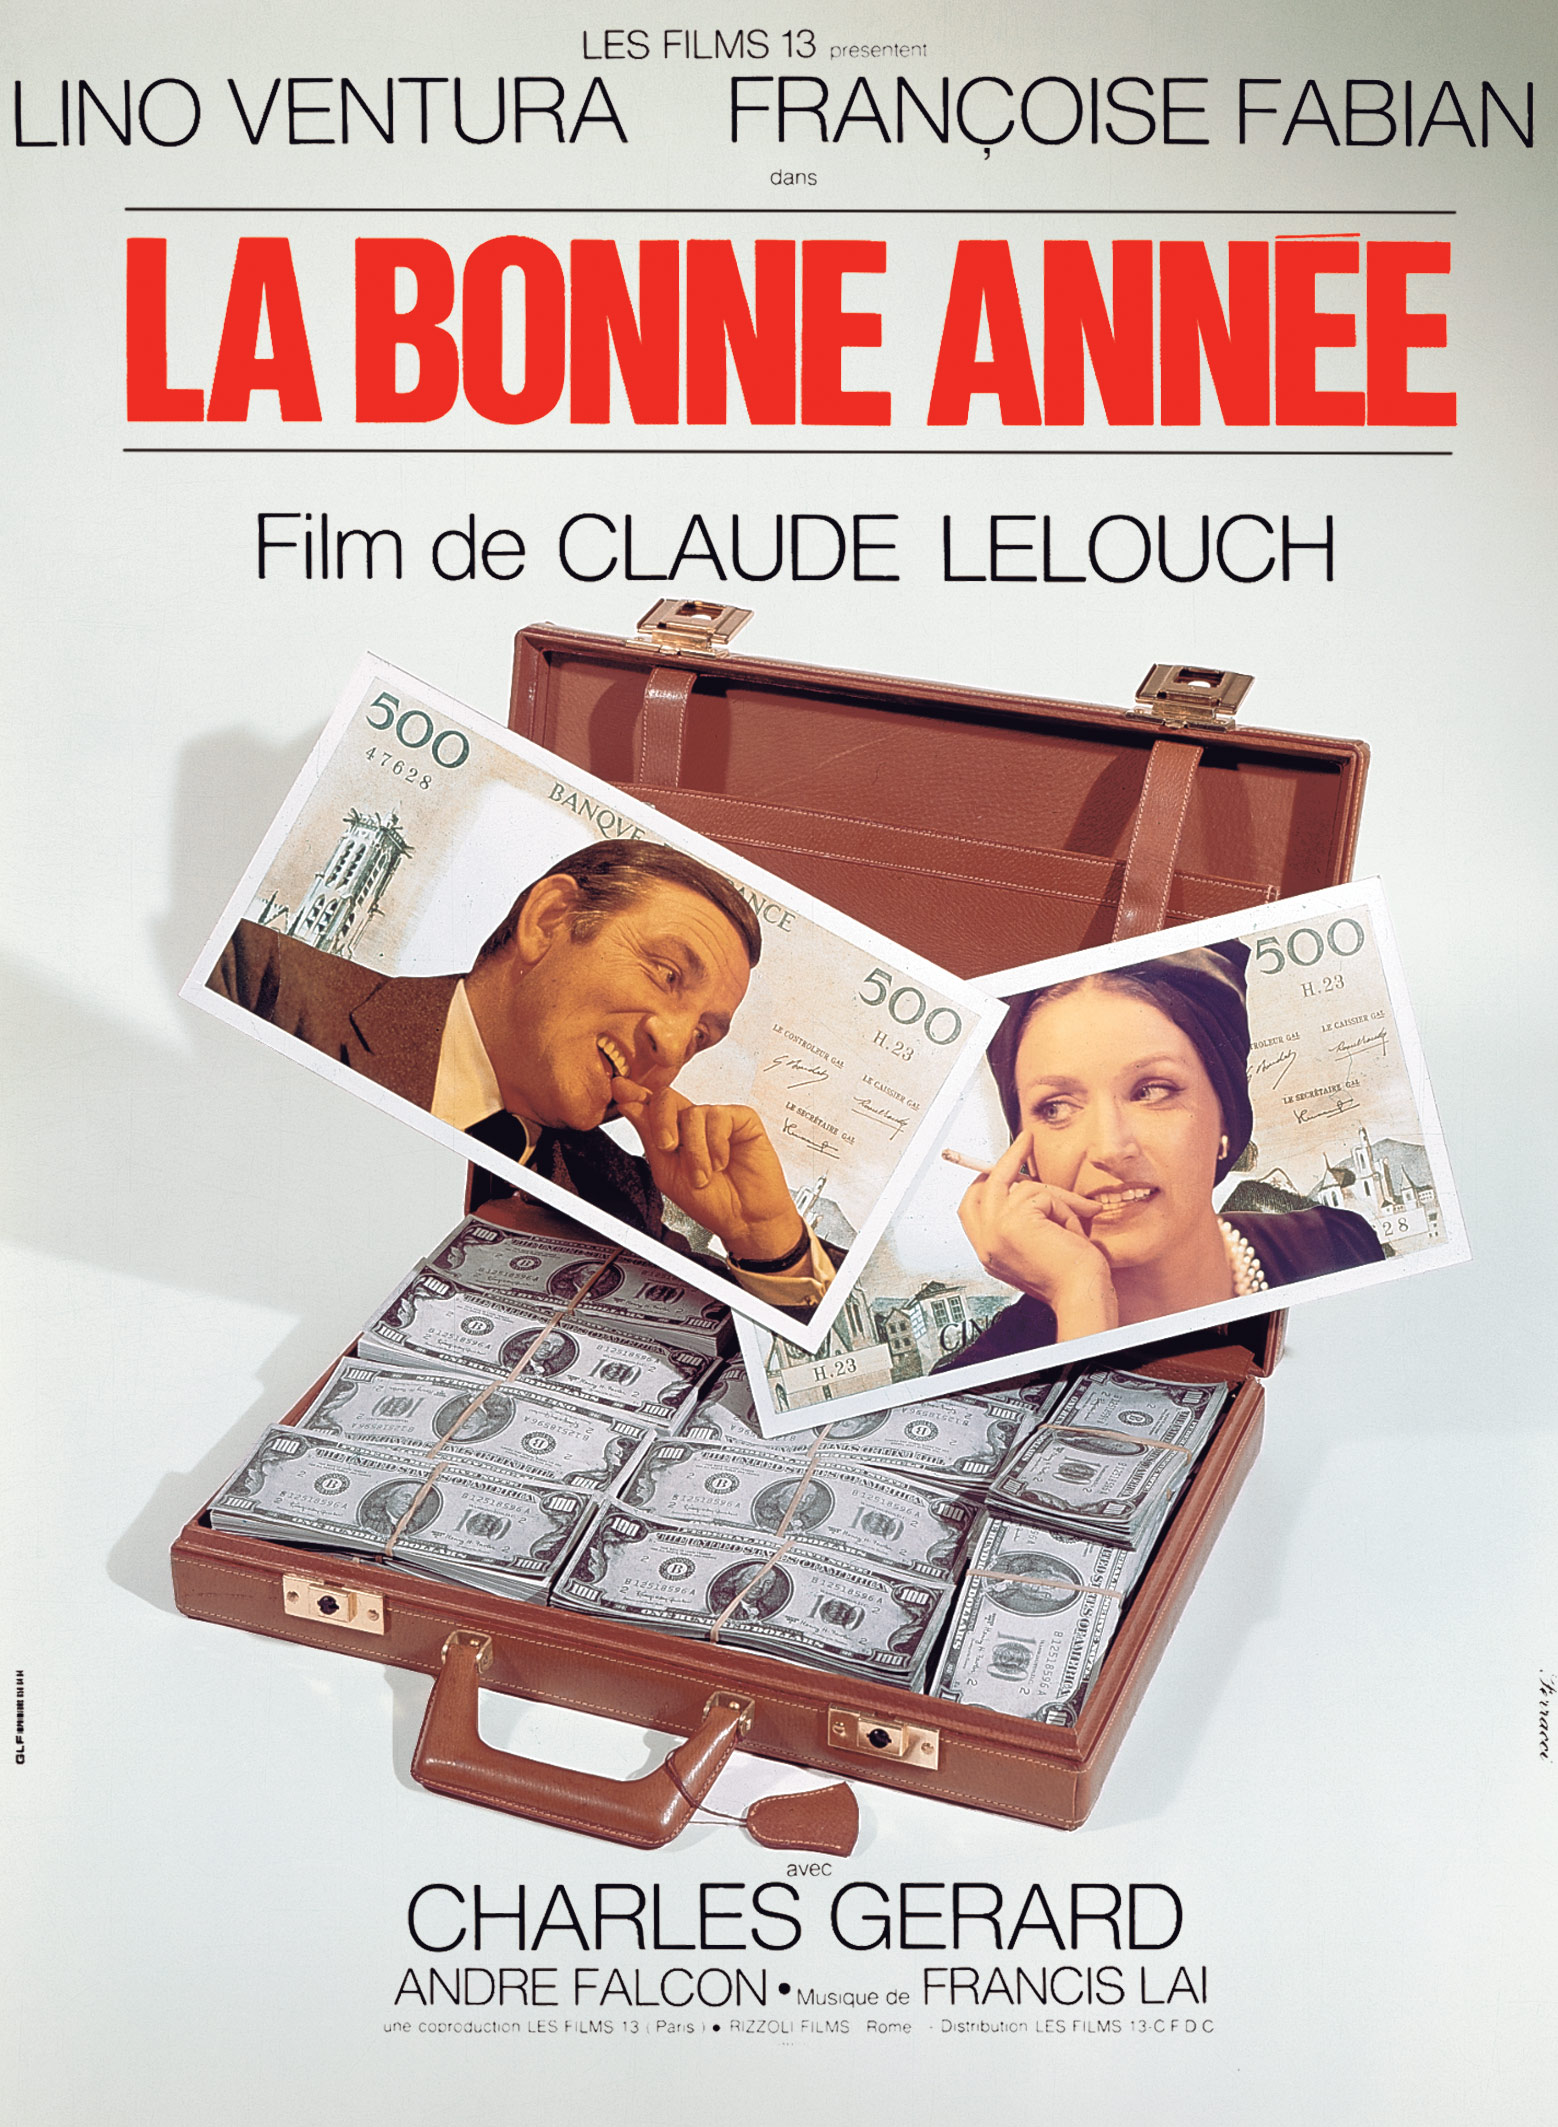 LA BONNE ANNEE - LINO VENTURA BOX OFFICE 1973 - BOX OFFICE STORY